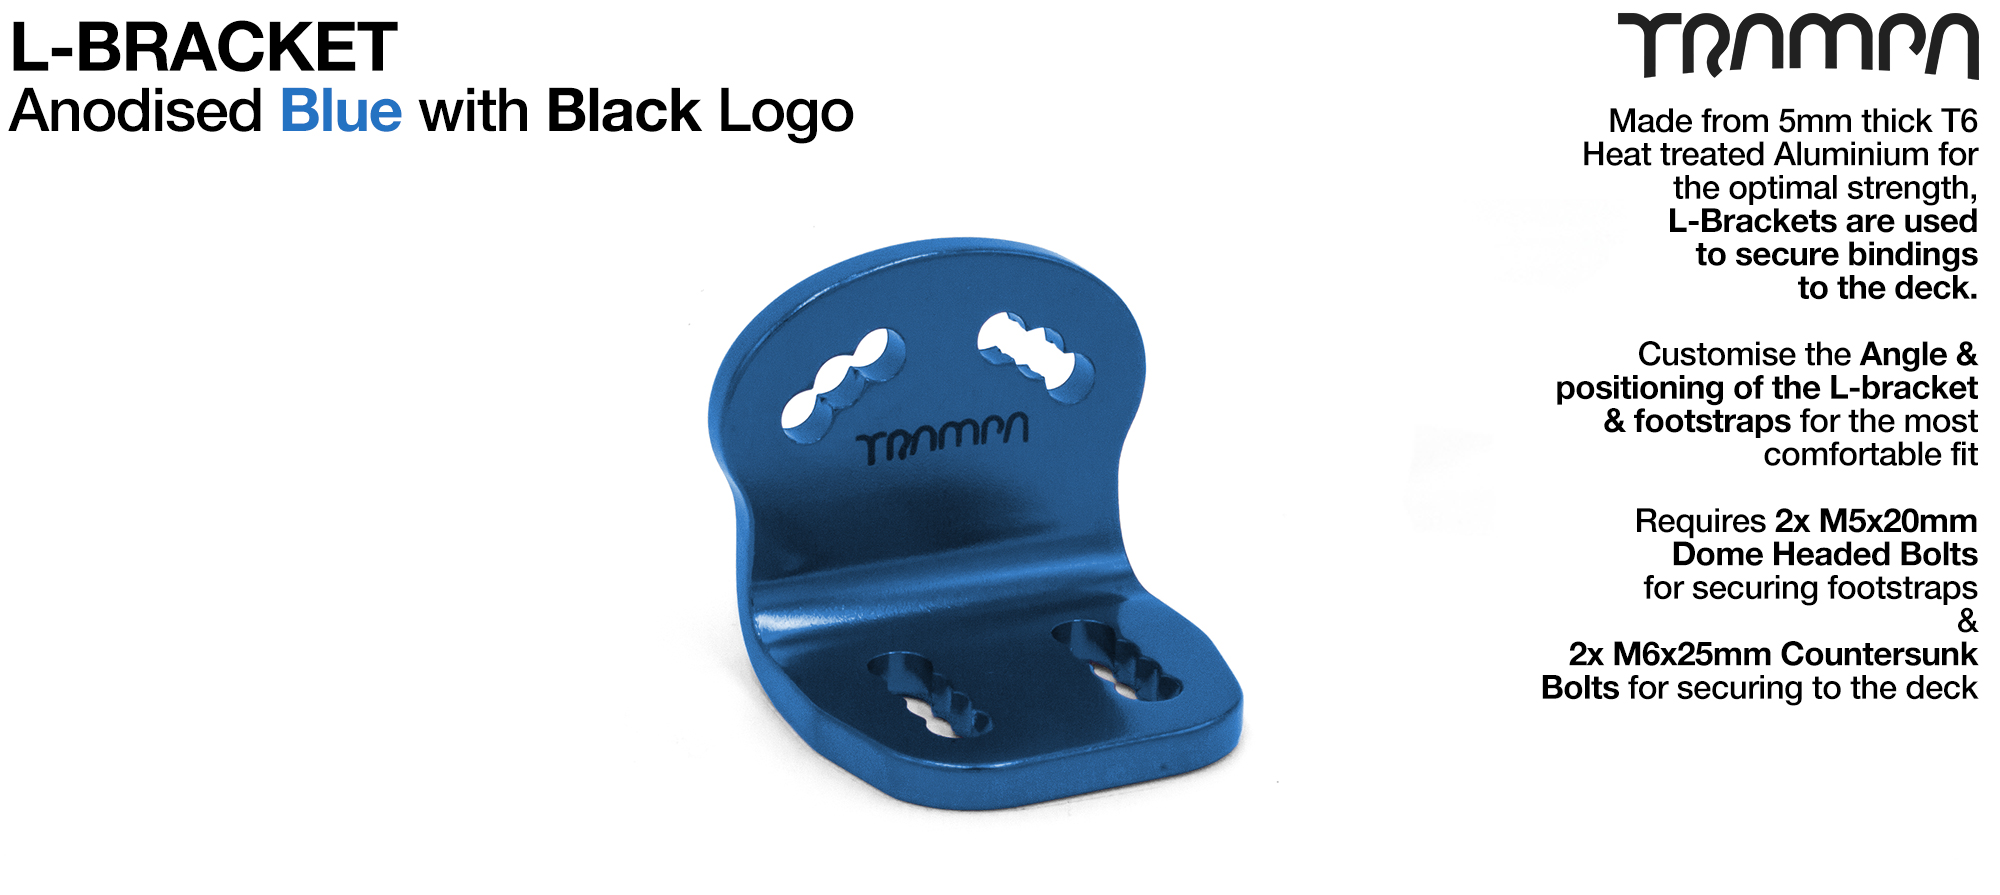 L Bracket - Anodised BLUE with BLACK logo